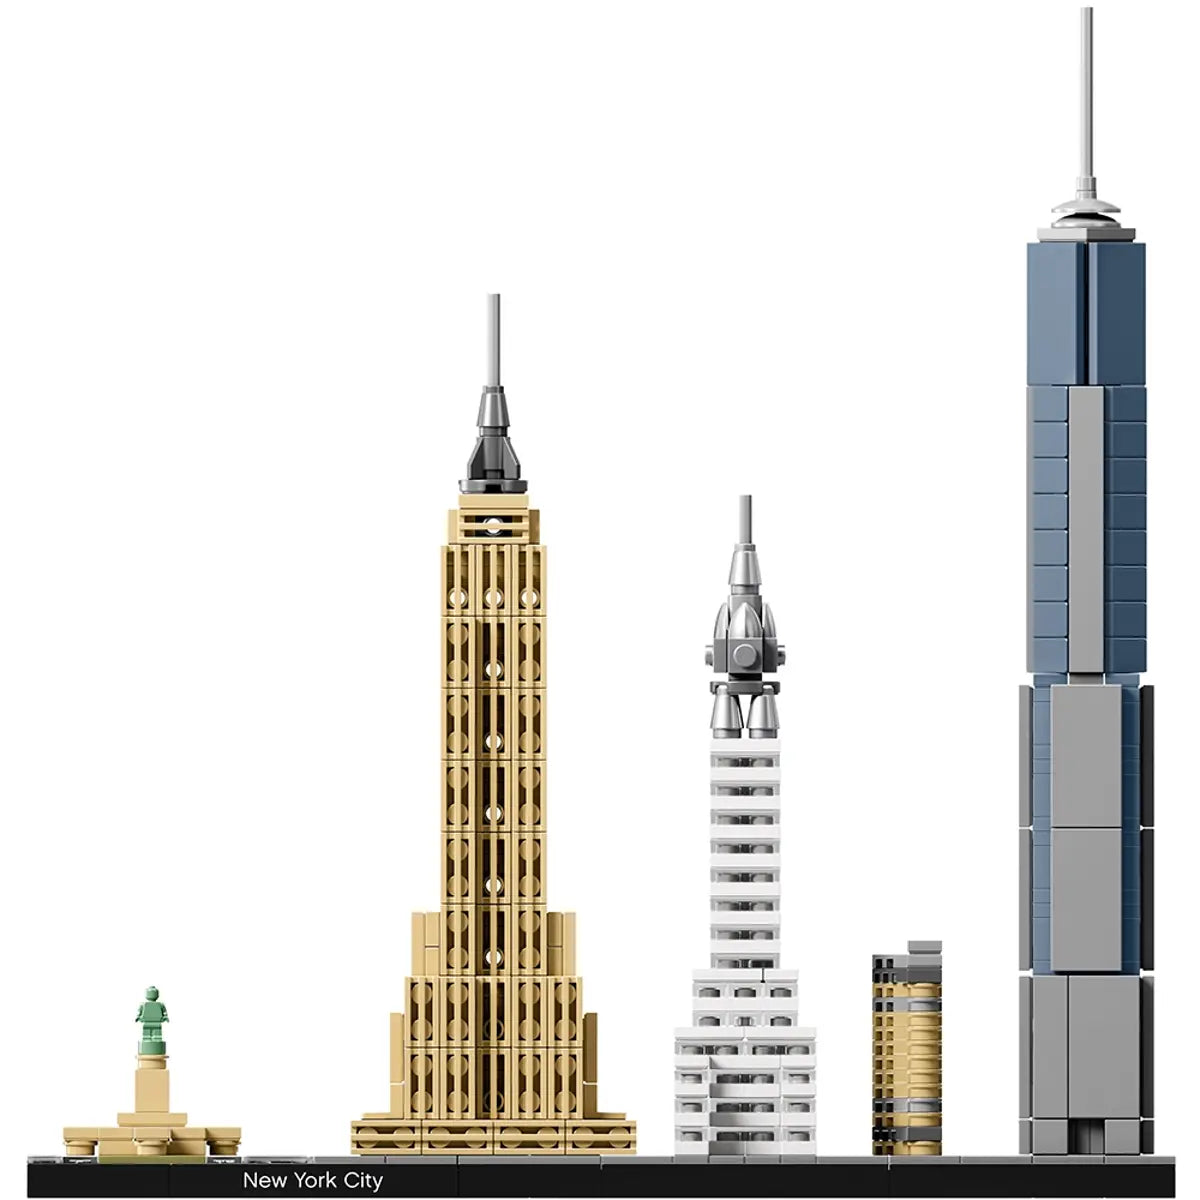 LEGO - Architecture - New York City - 21028